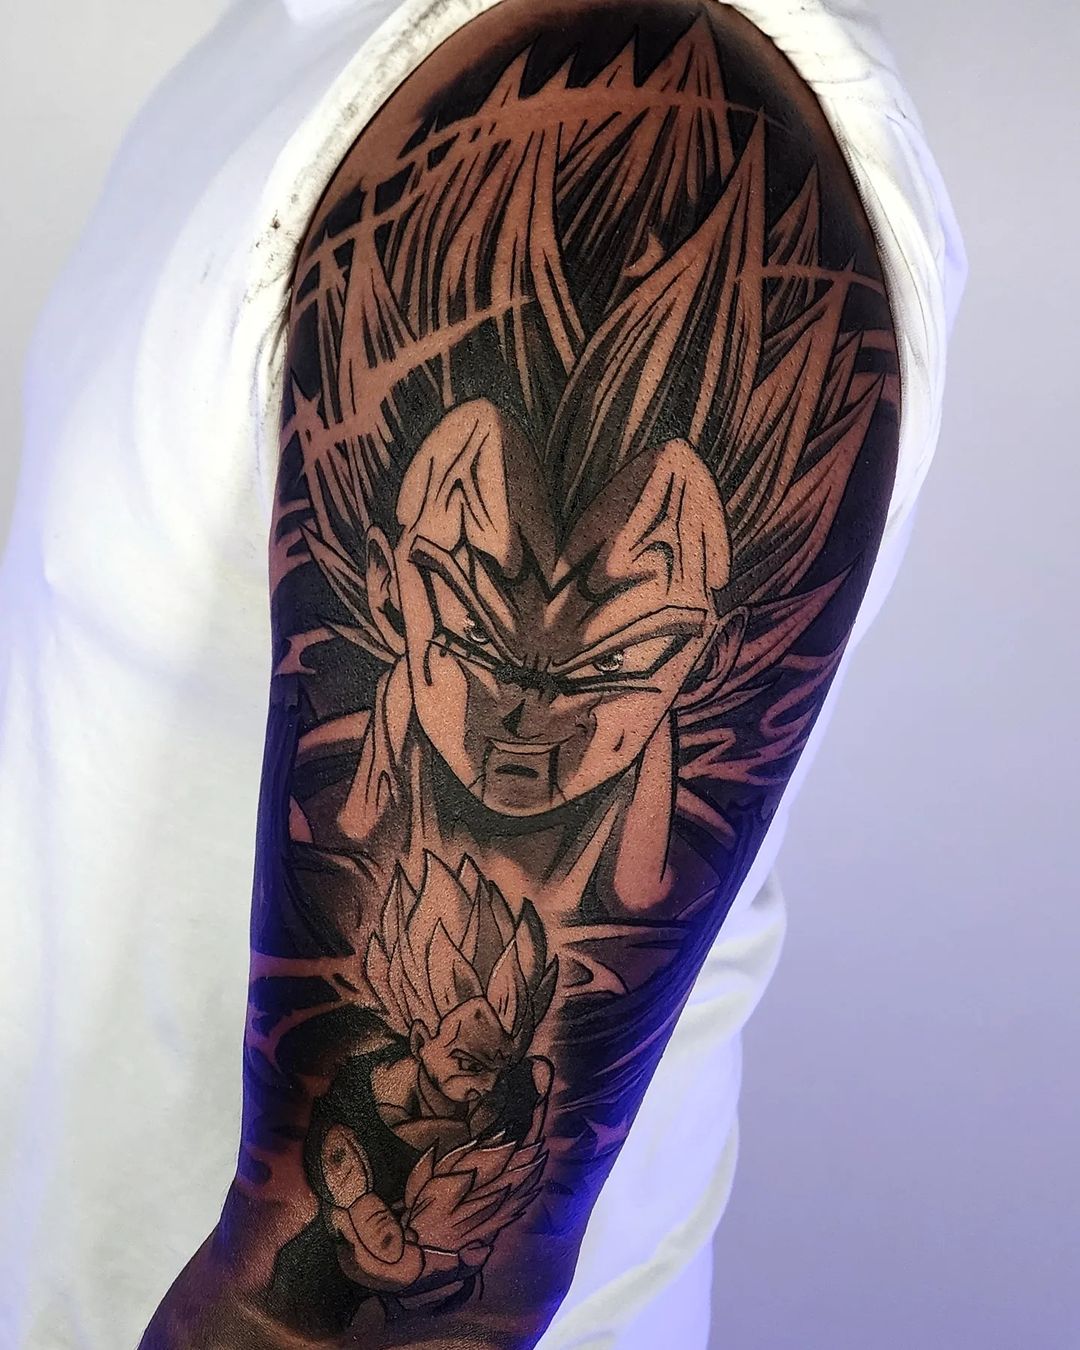 Vegeta's Gazeintense Full Arm Dragon Ball Tattoo